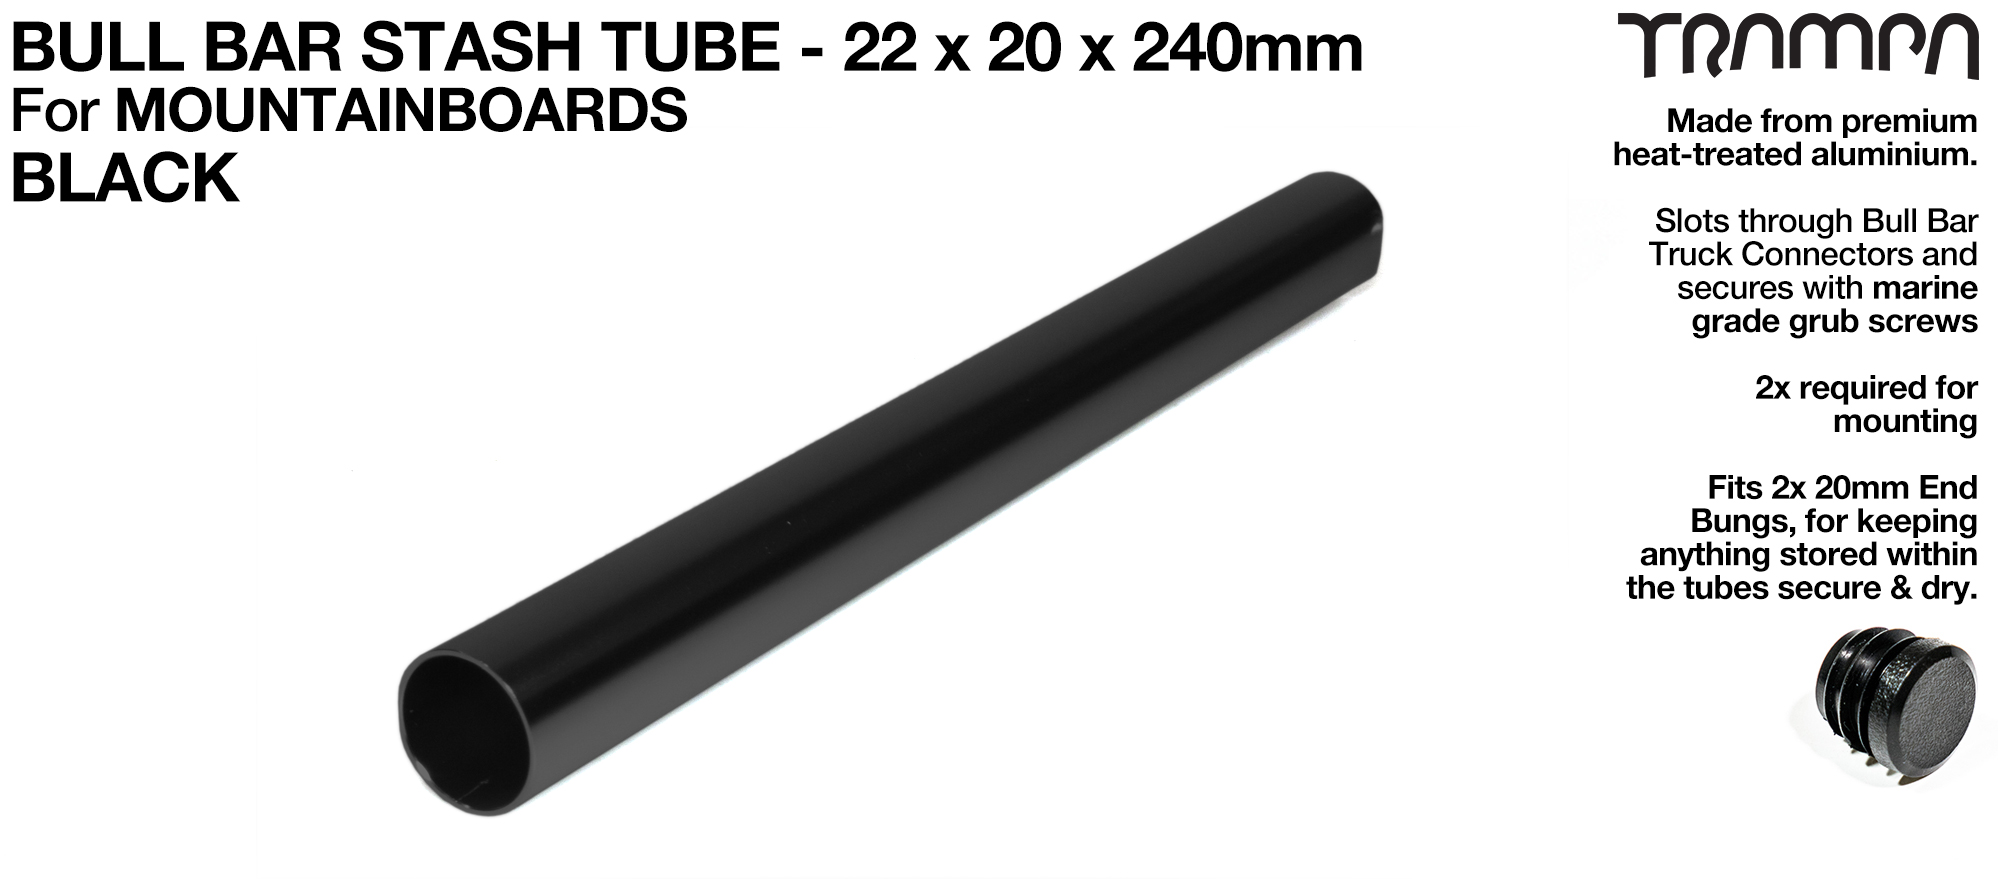 Mountainboard Bull Bar Hollow Aluminium Stash Tube - BLACK 22x20x240mm